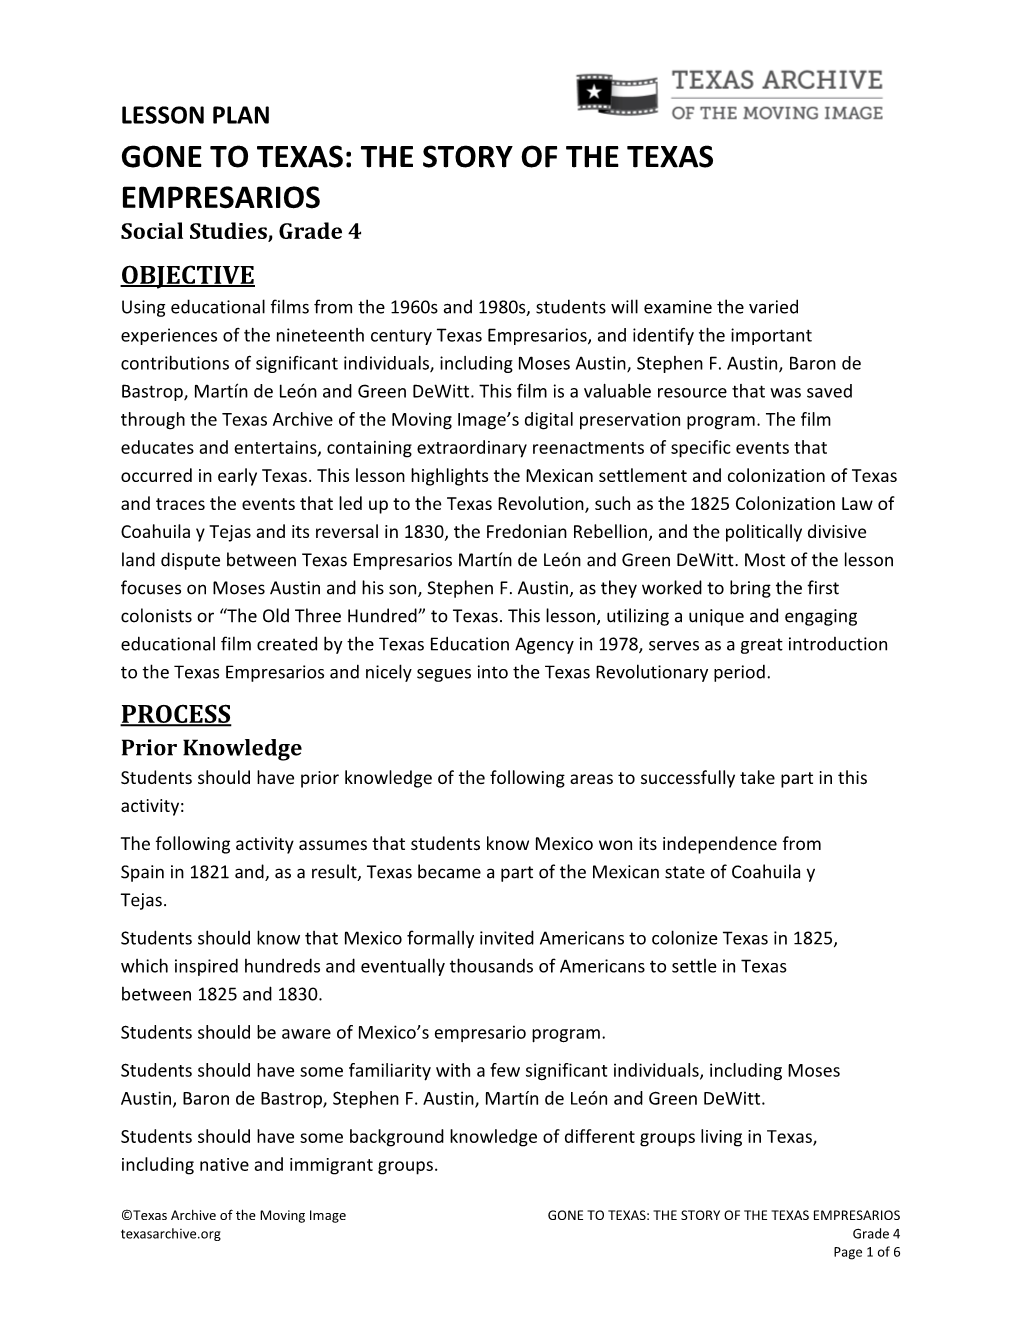 The Story of the Texas Empresarios